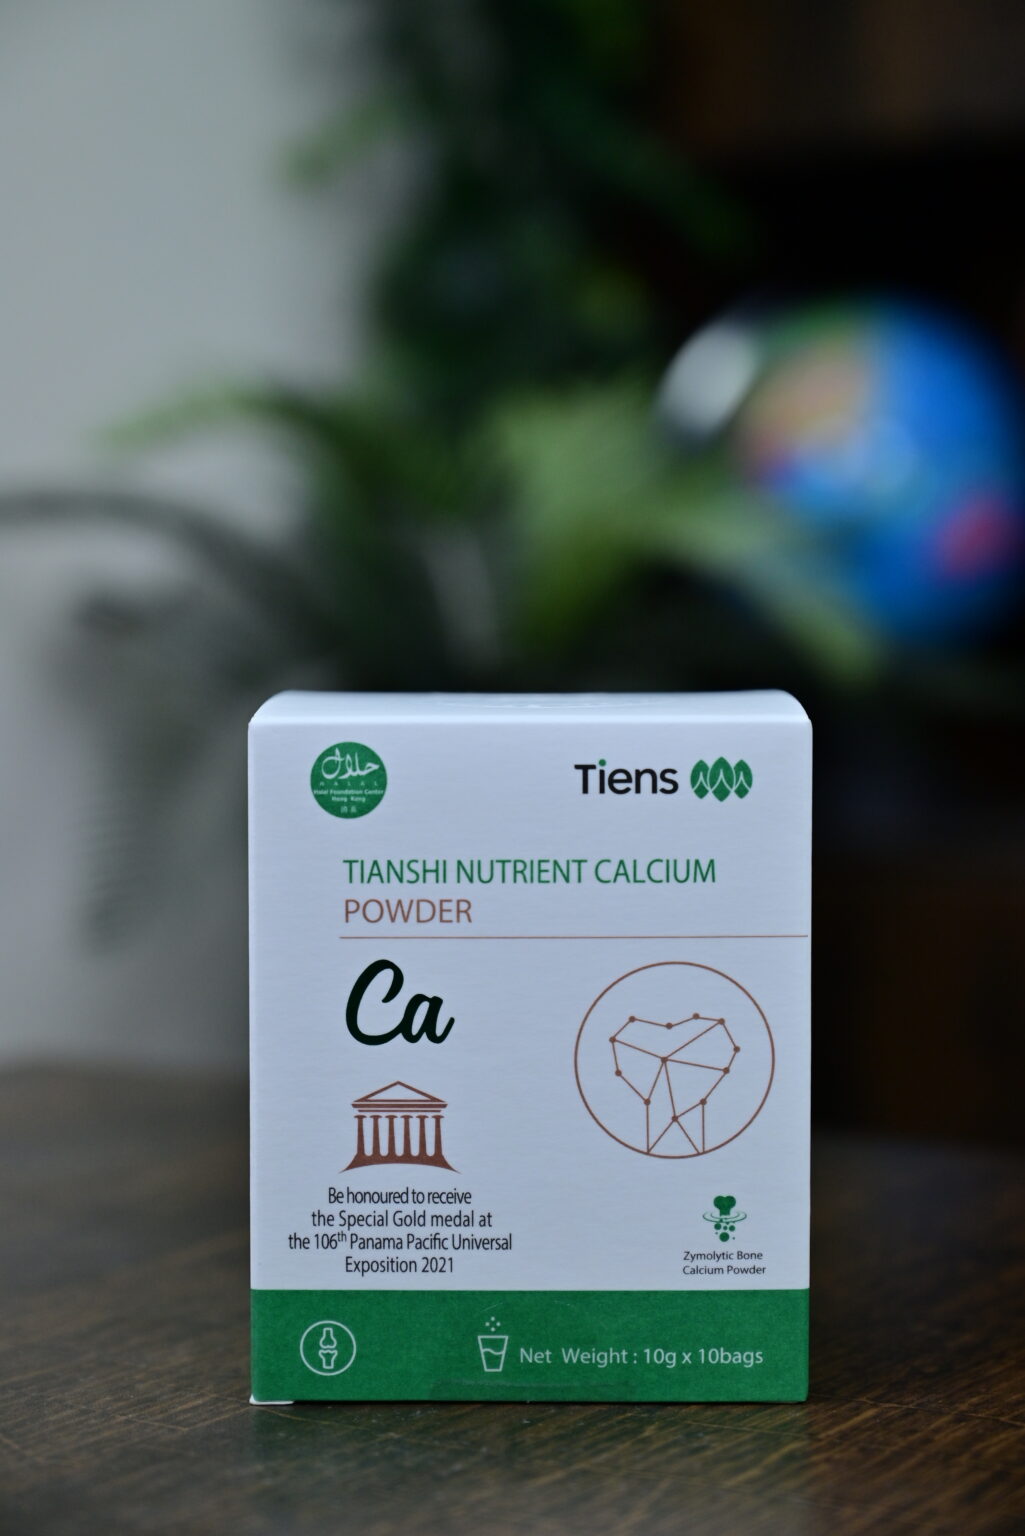 Tianshi Nutrient Calcium Powder – Tiens Infinity